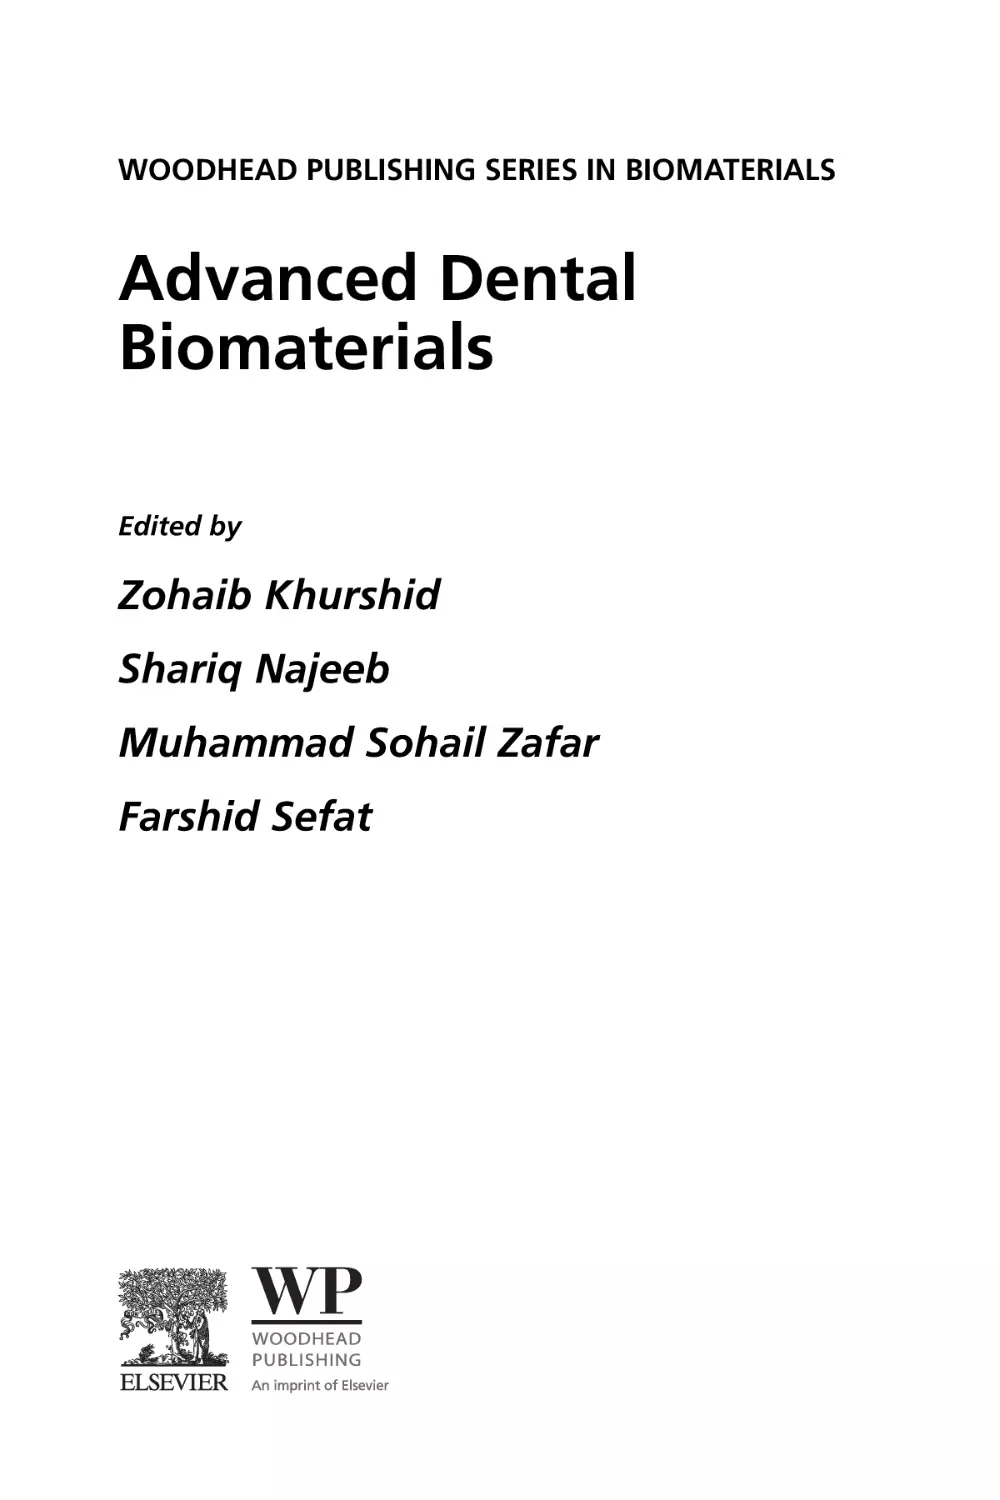 Advanced Dental Biomaterials